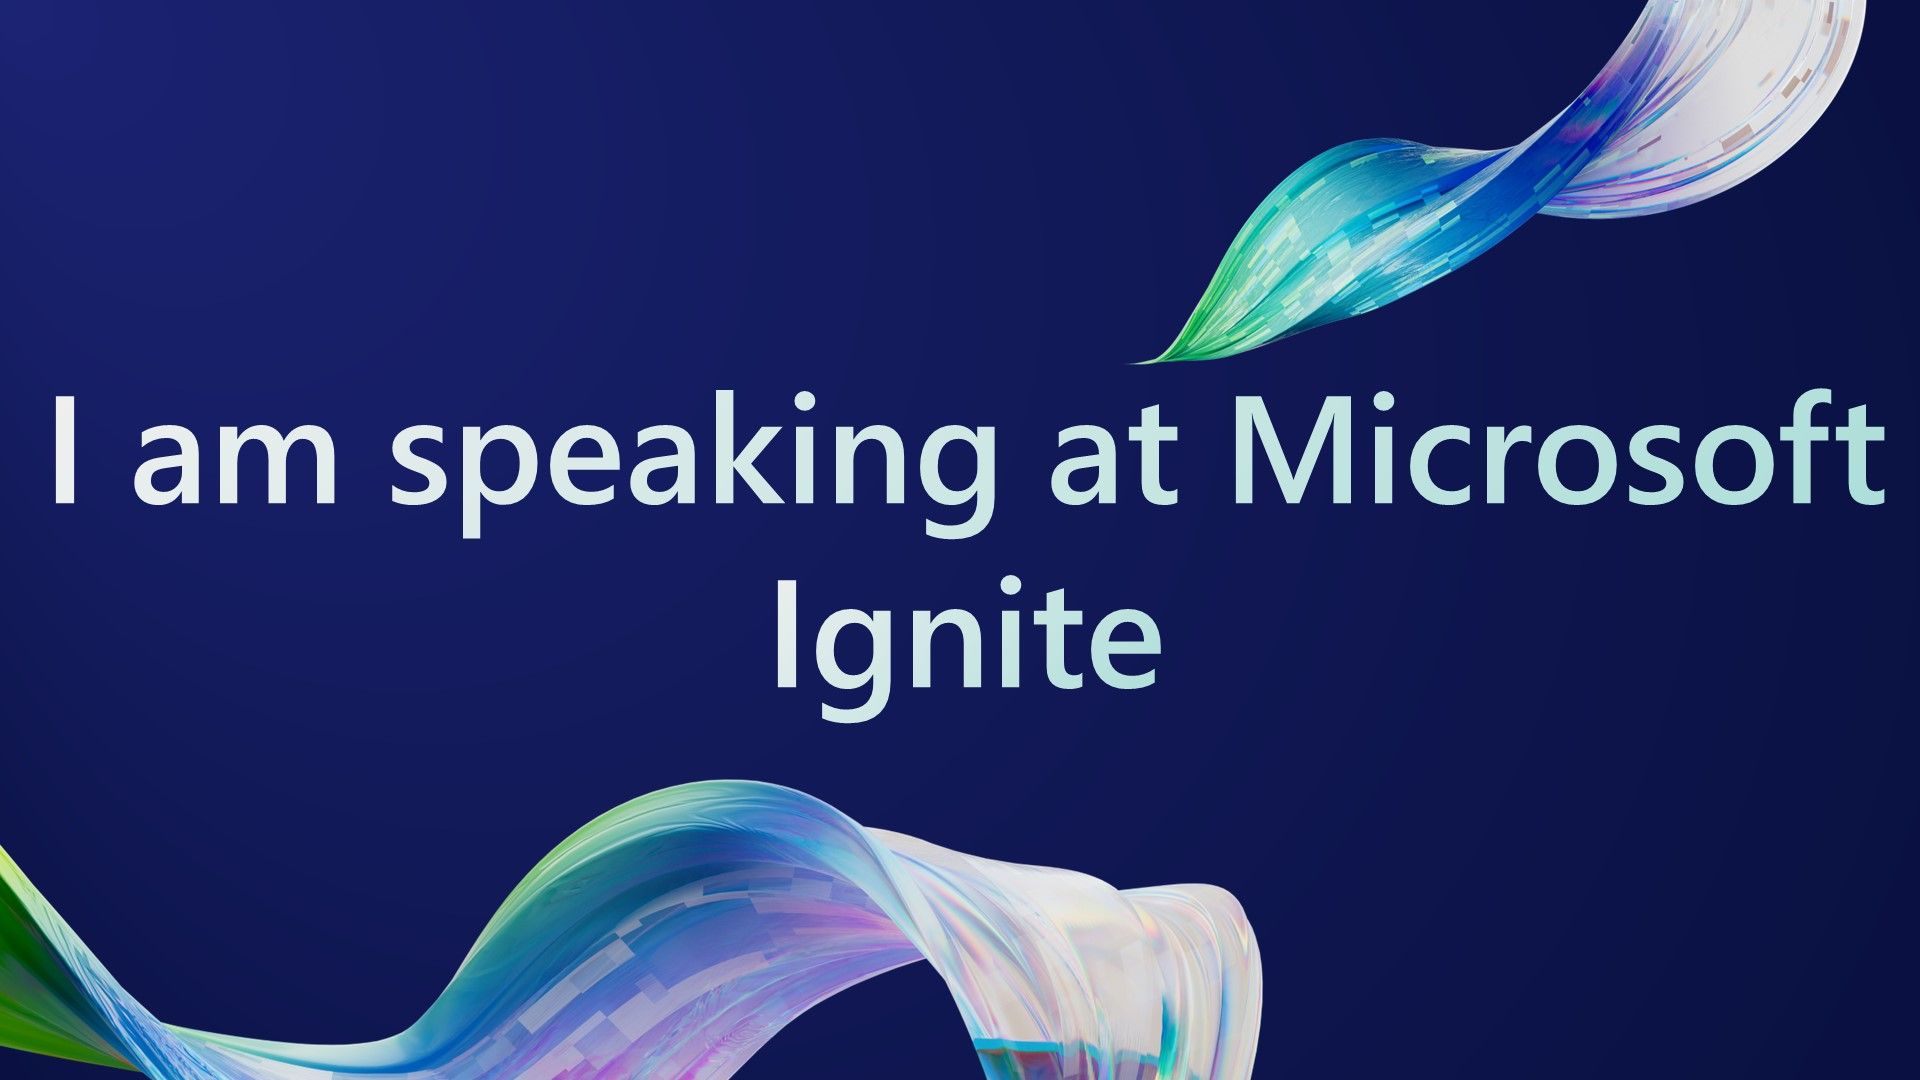 I am speaking at Microsoft ignite